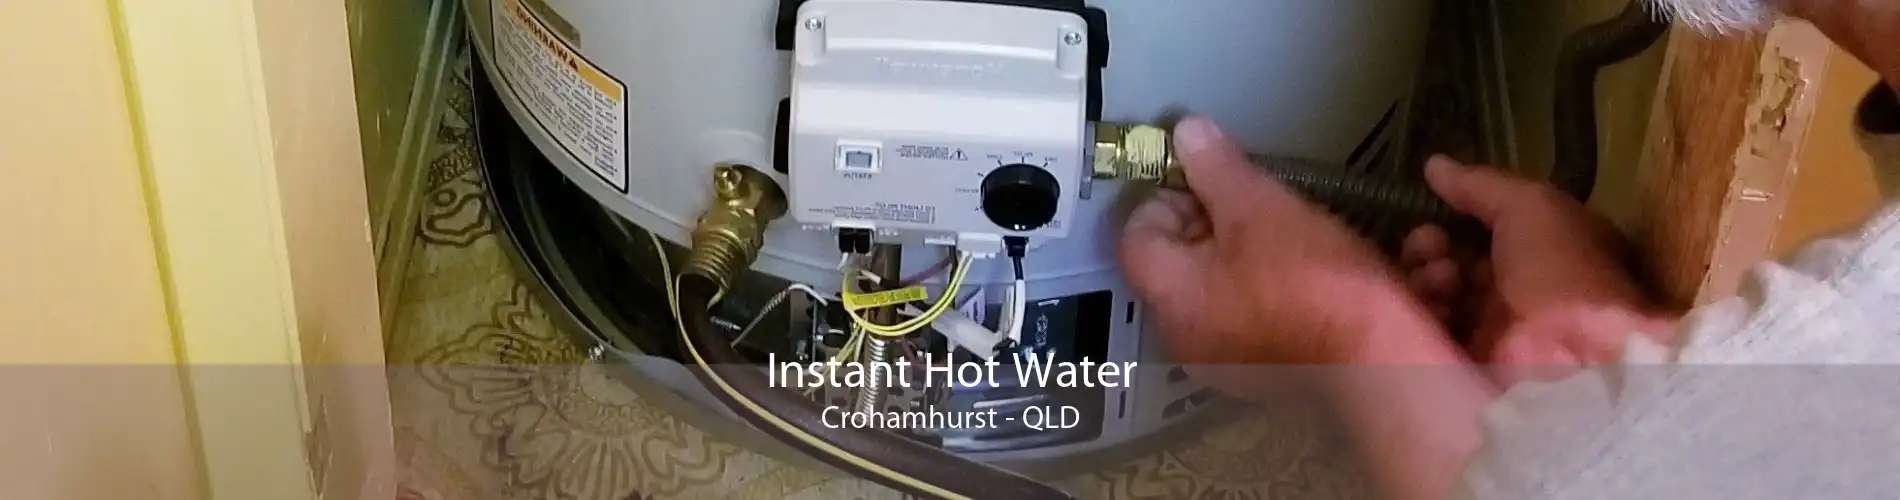 Instant Hot Water Crohamhurst - QLD